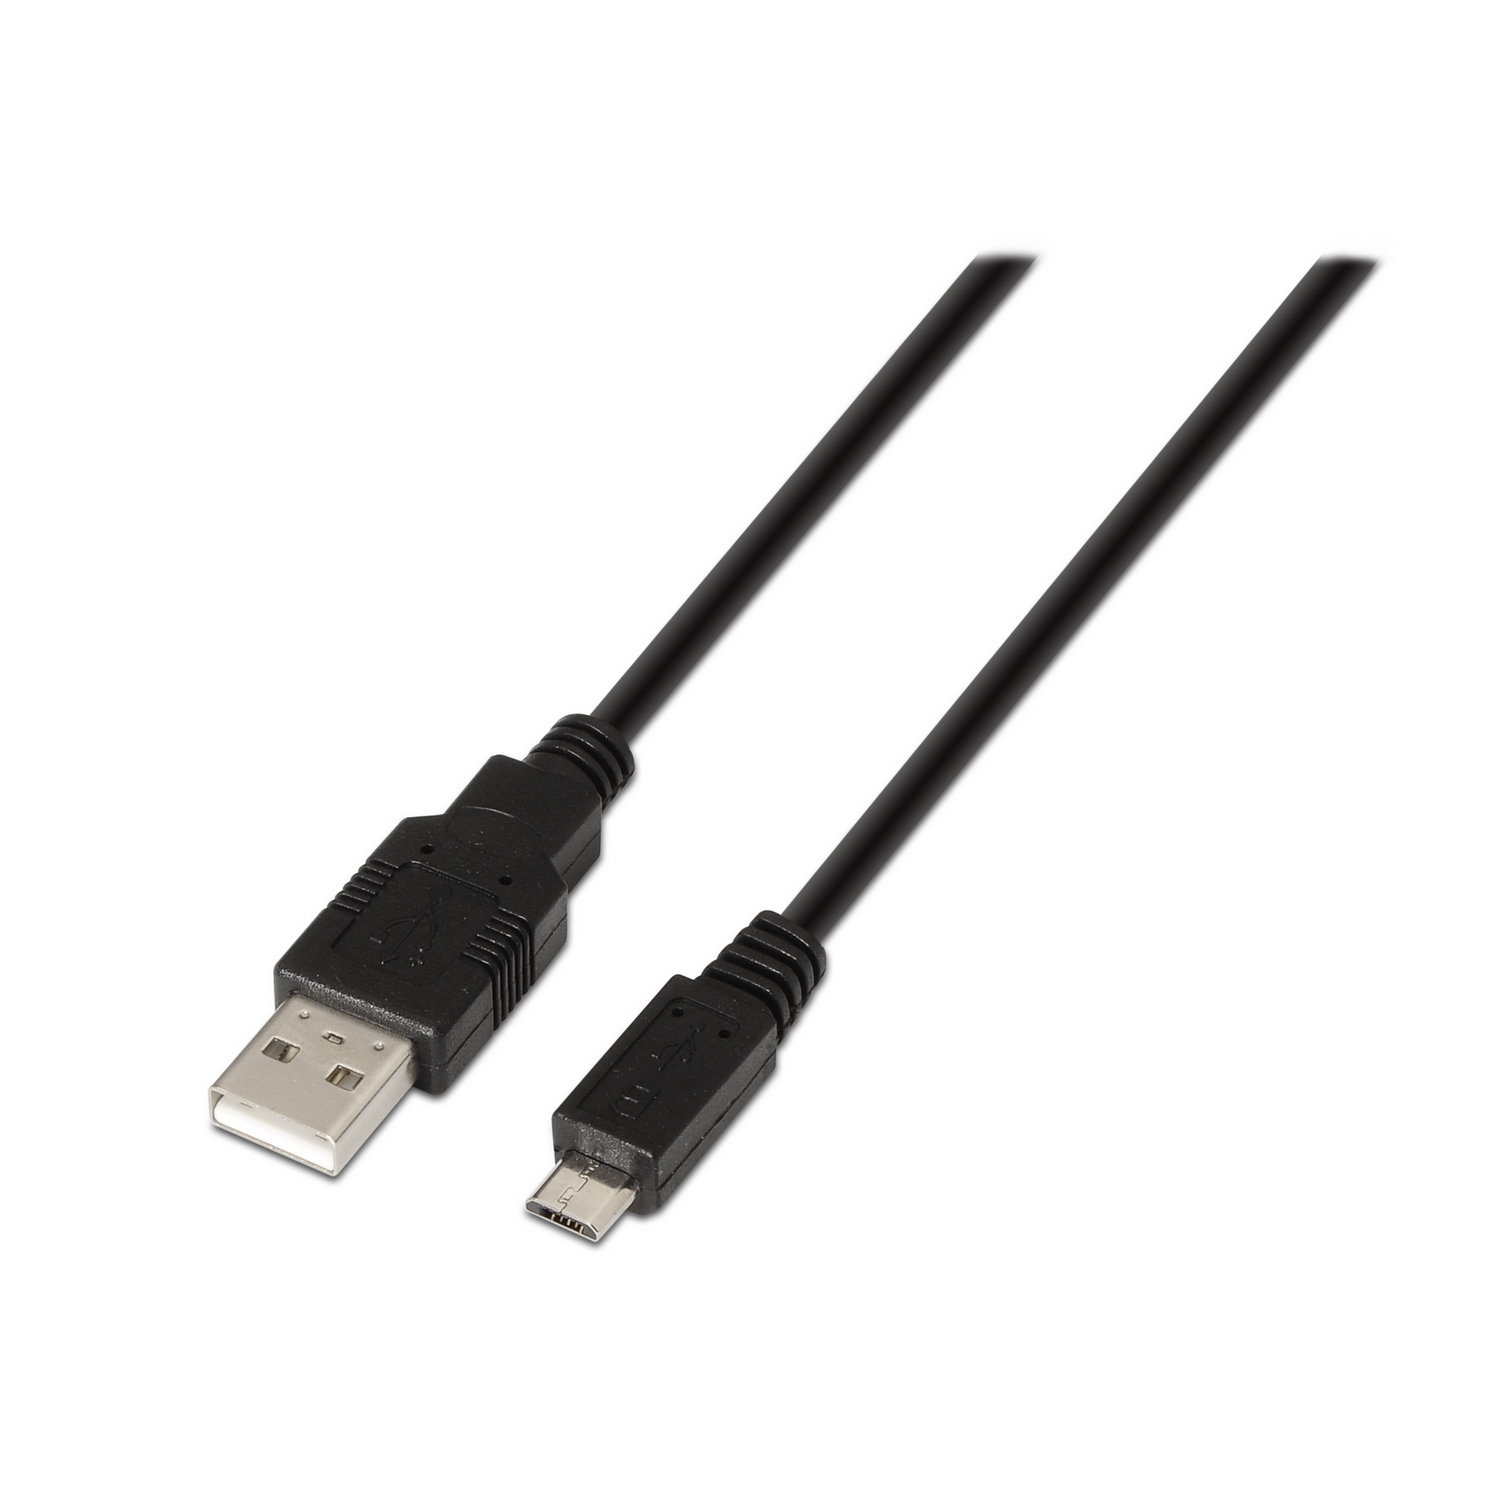 Aisens Cable USB 2.0 - Tipo A Macho a Micro B Macho - 1.8m - Color Negro